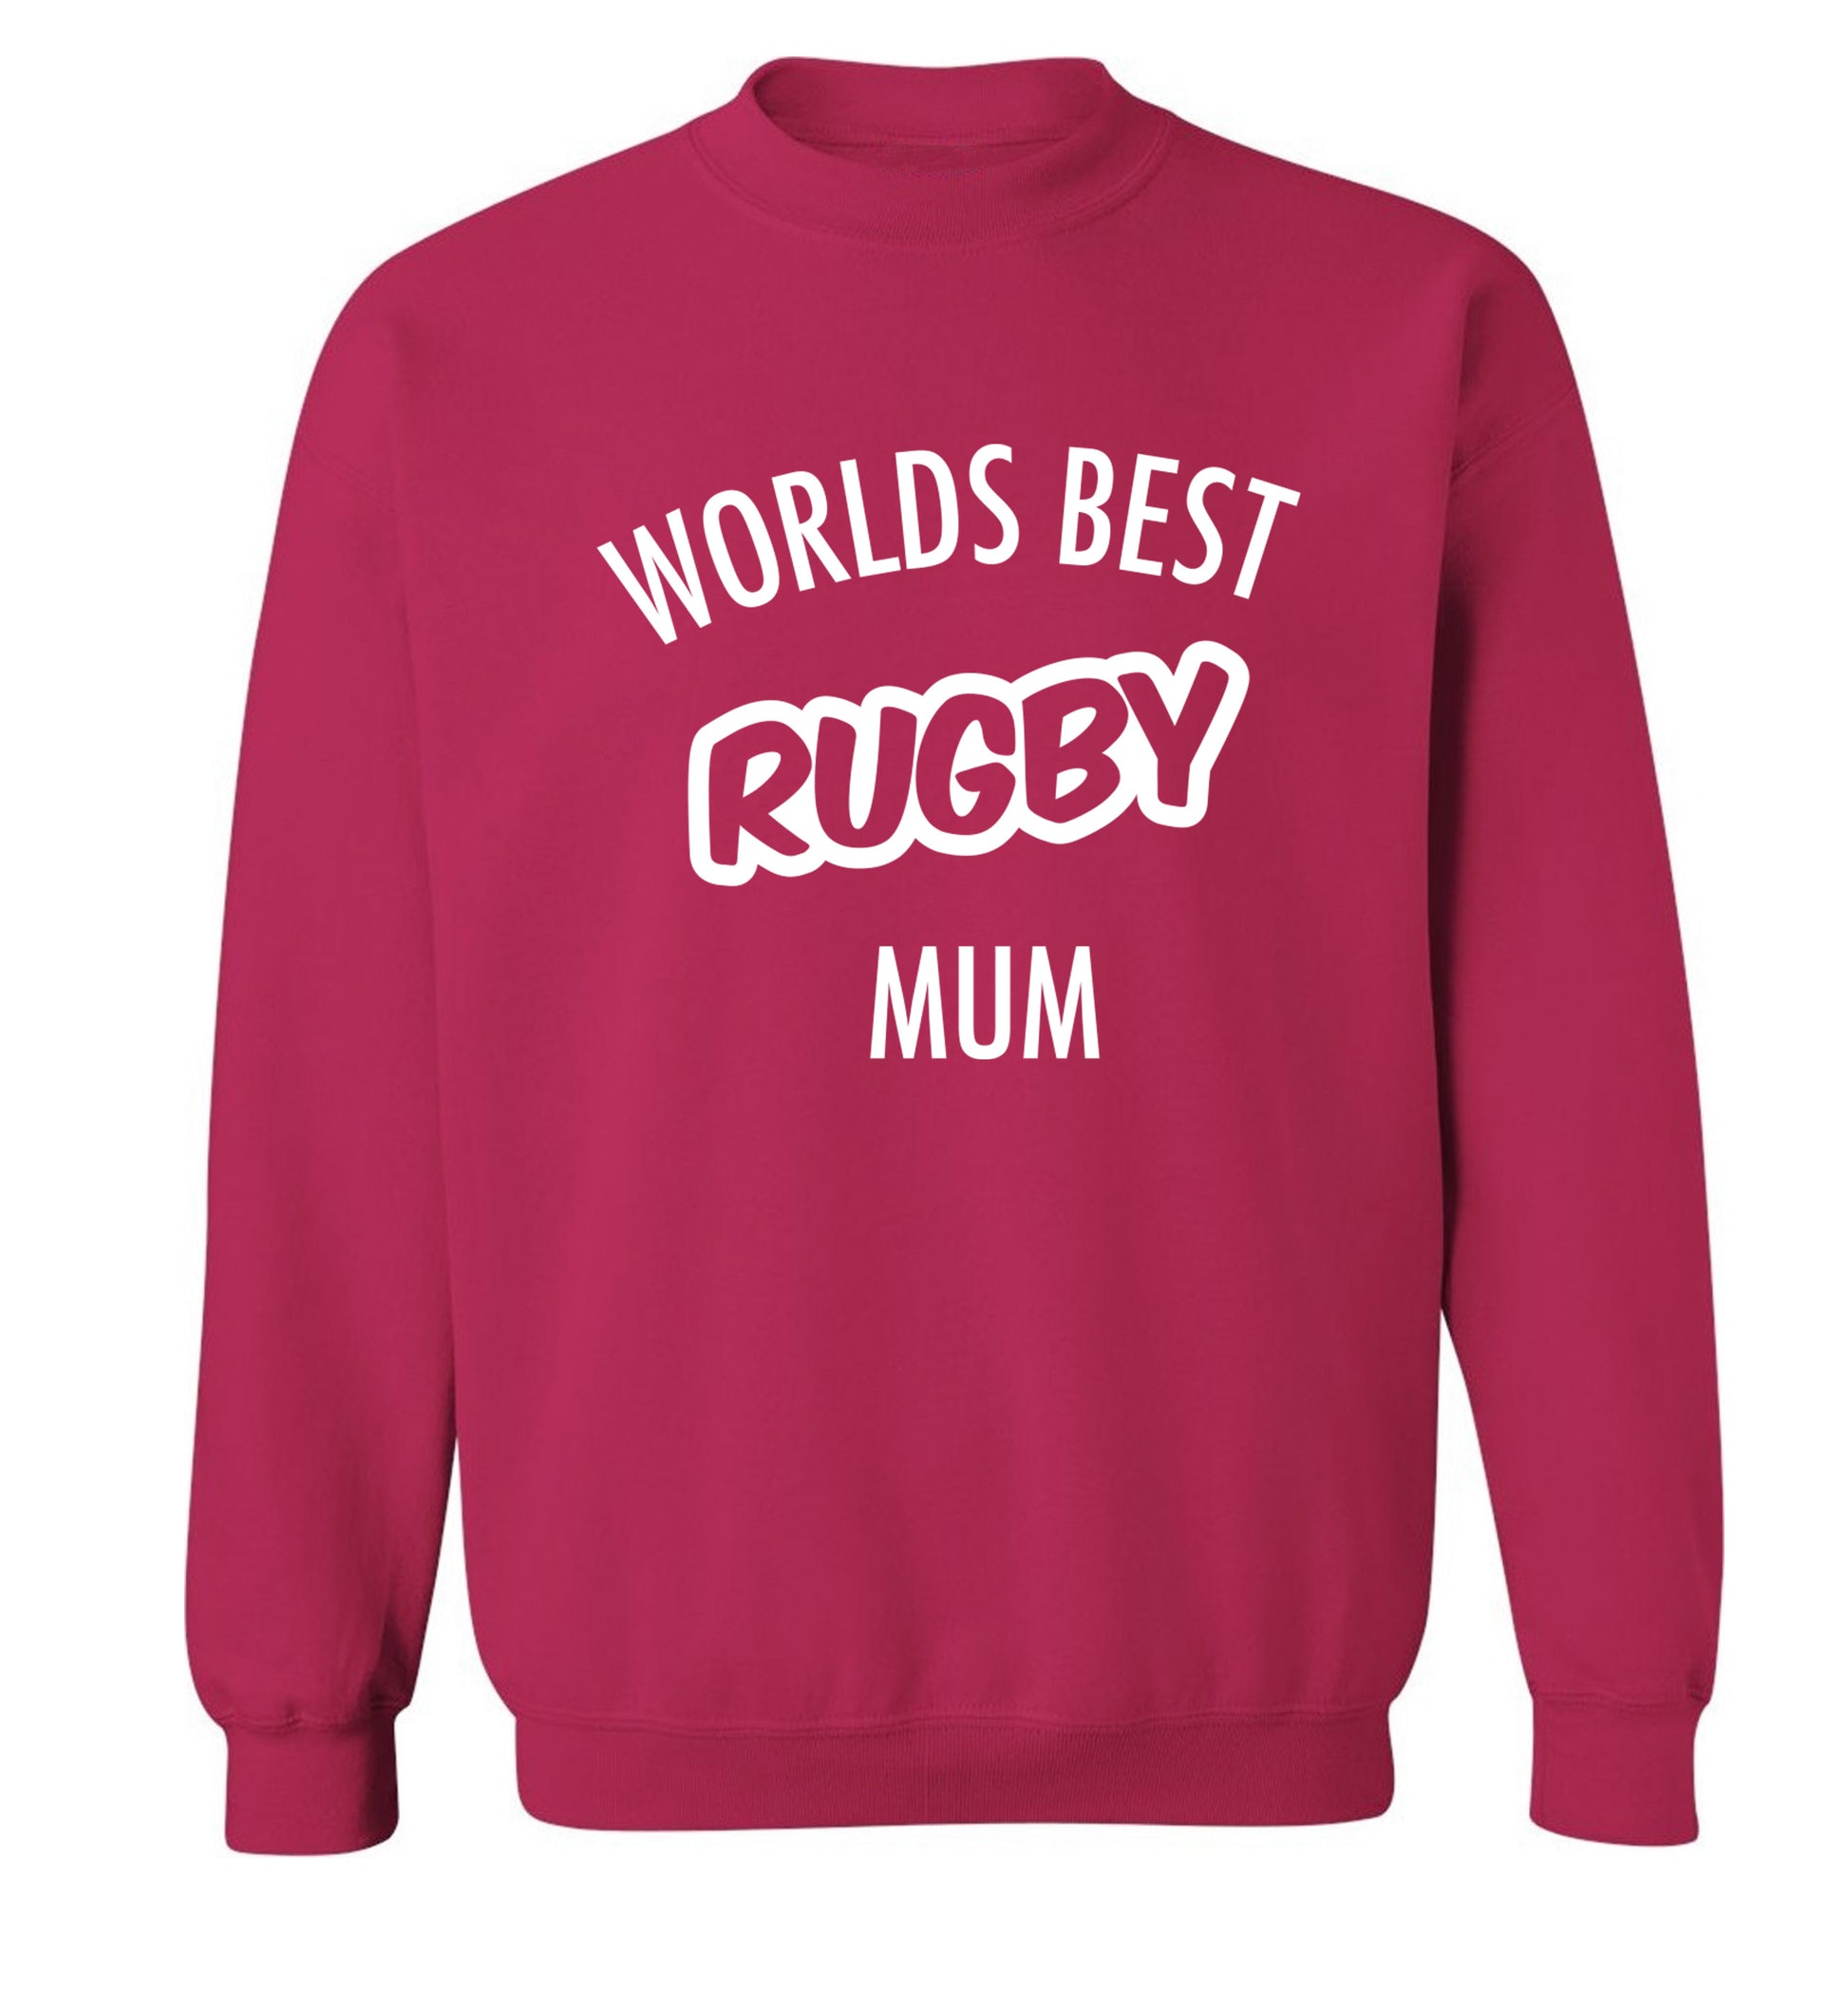 Worlds best rugby mum Adult's unisex pink Sweater 2XL